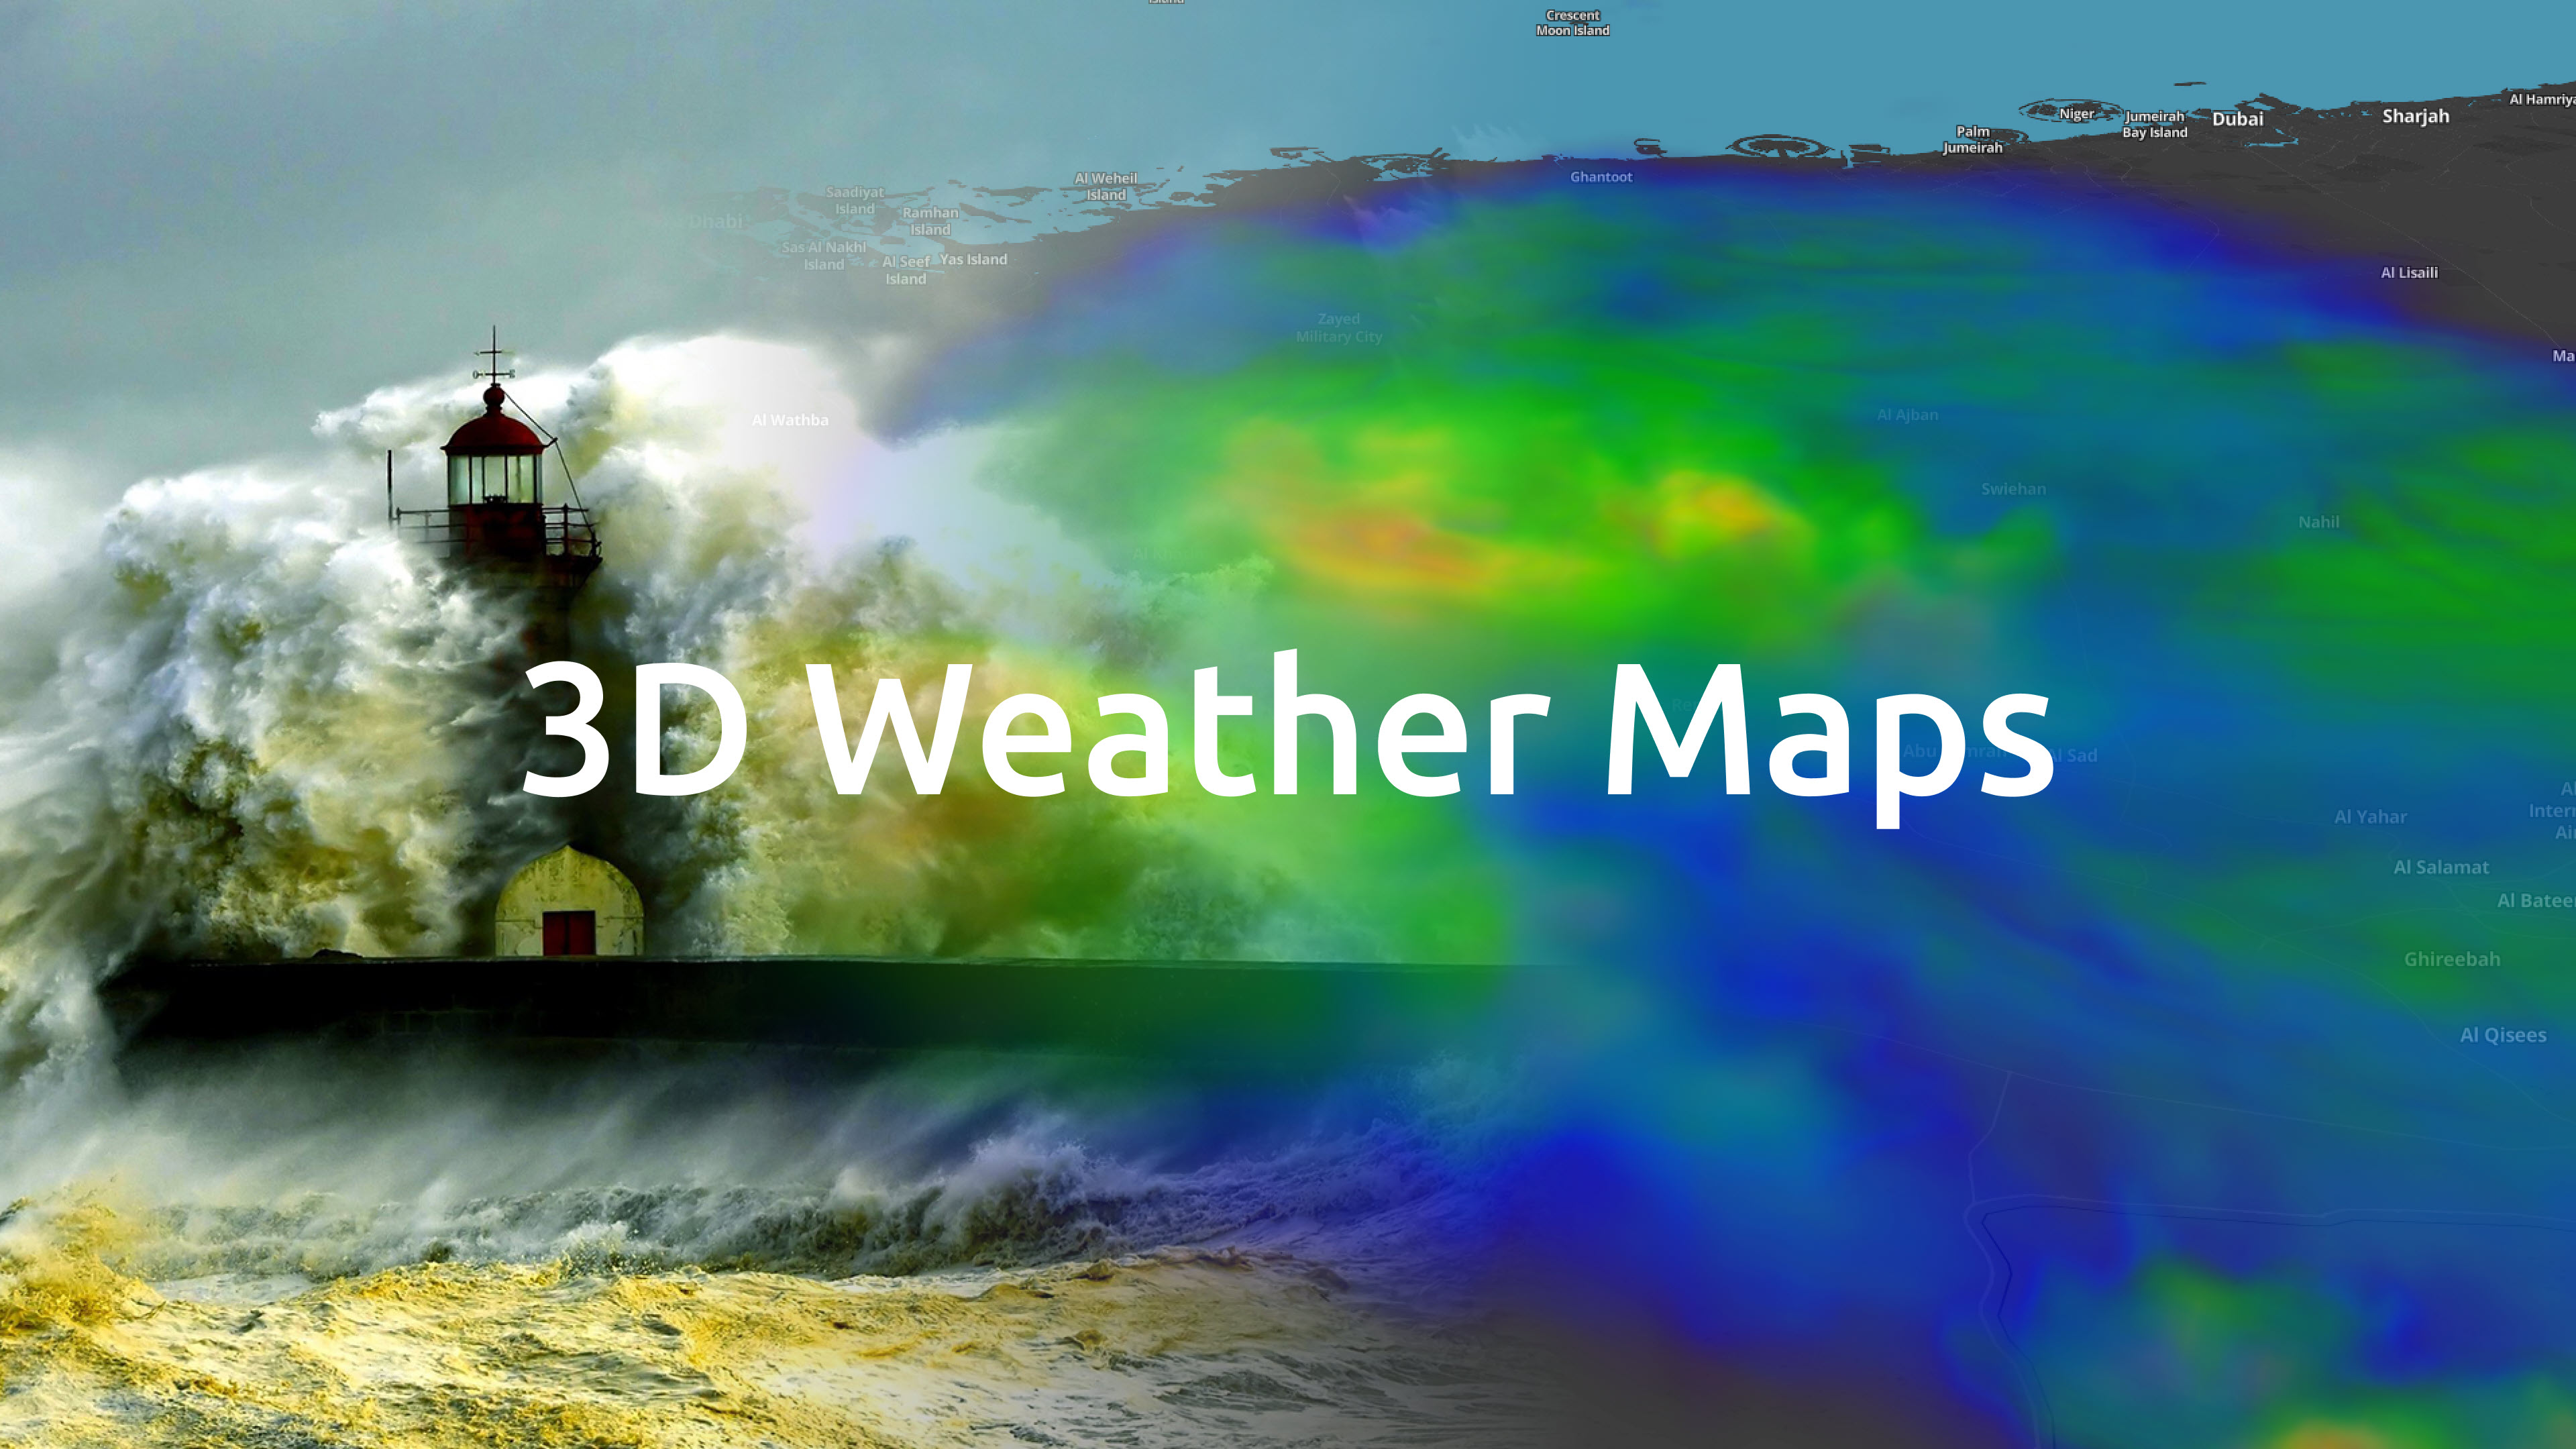 Creare incredibili immagini di mappe radar meteorologiche 3D